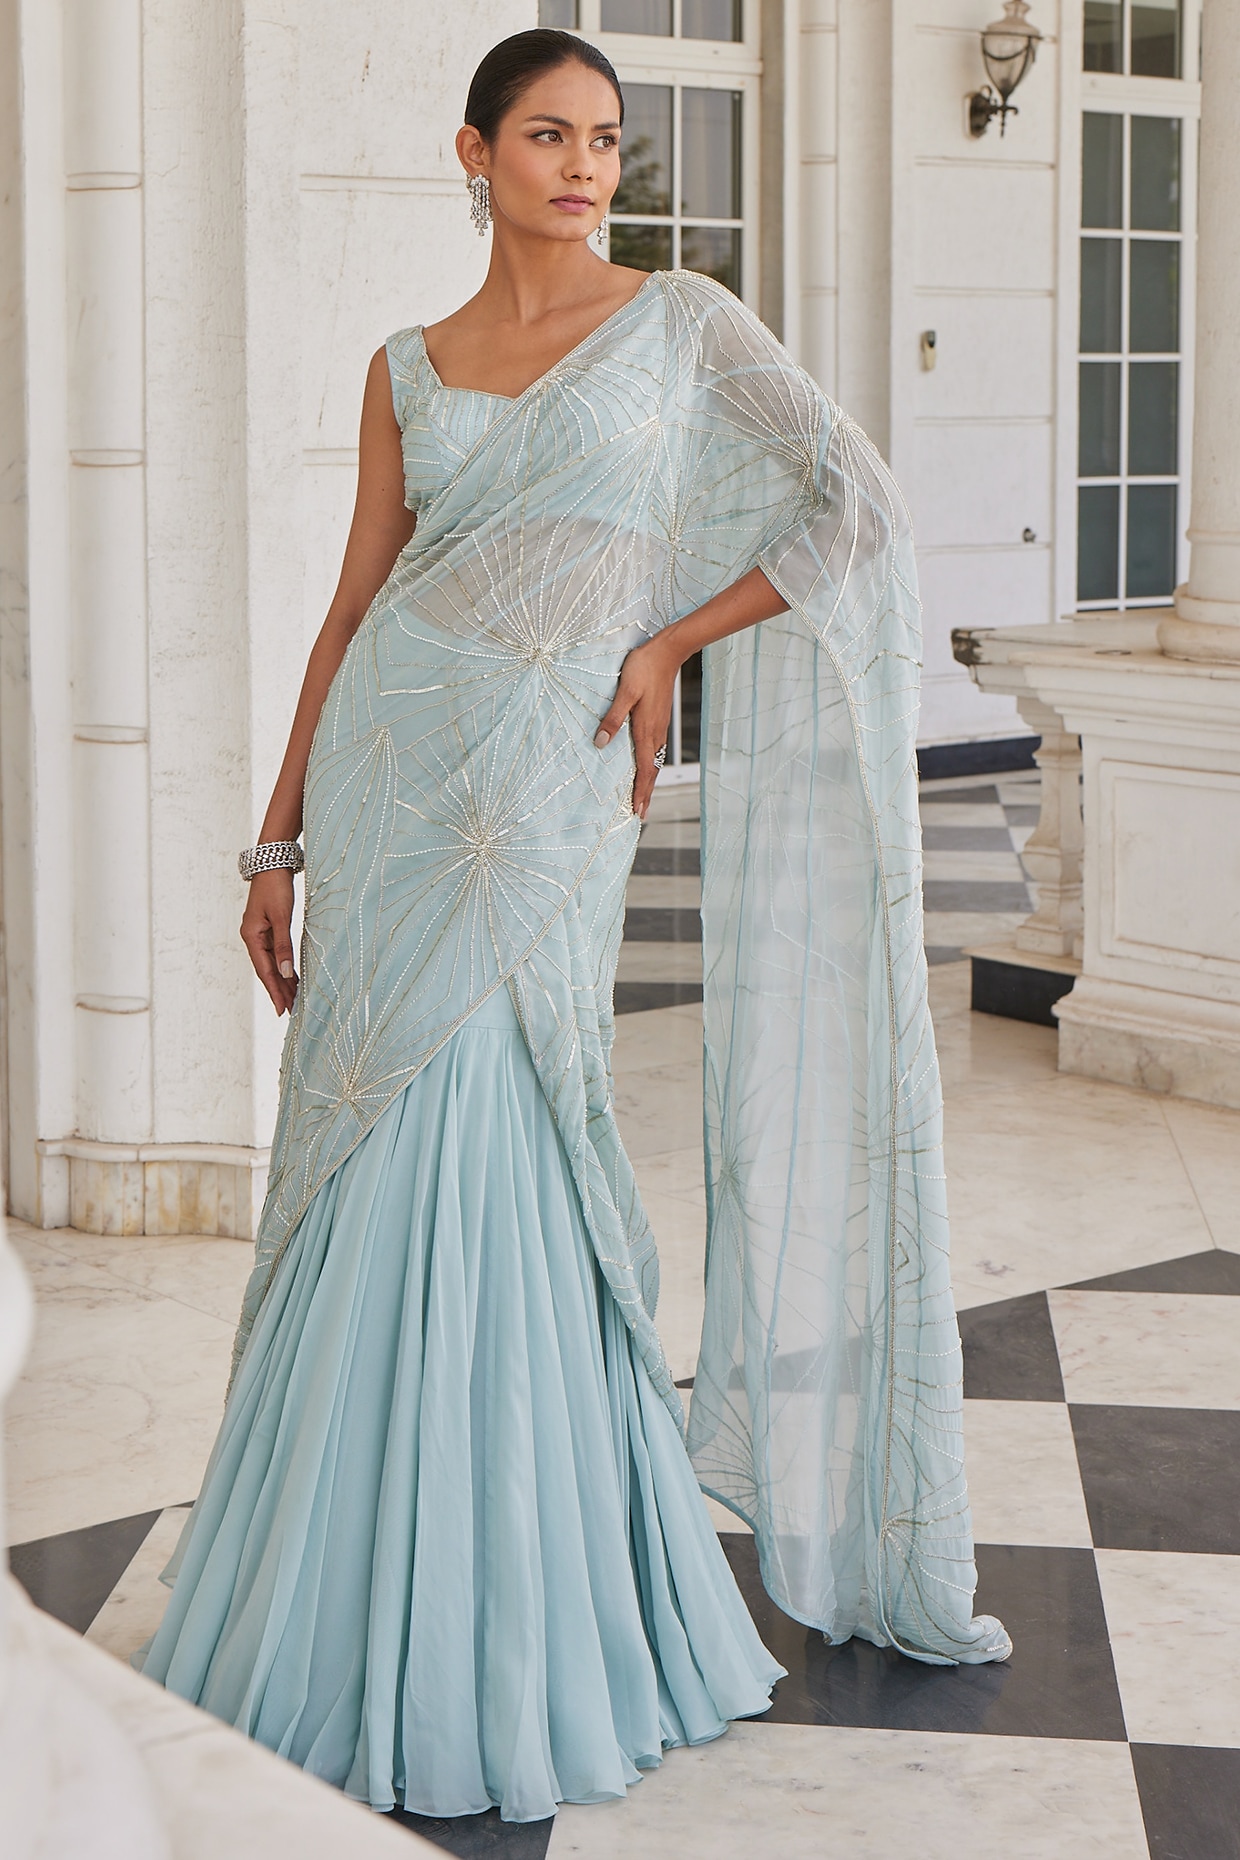 Suvidha Fashion – Shop Indian Women's Sarees Online, Wedding Bridal